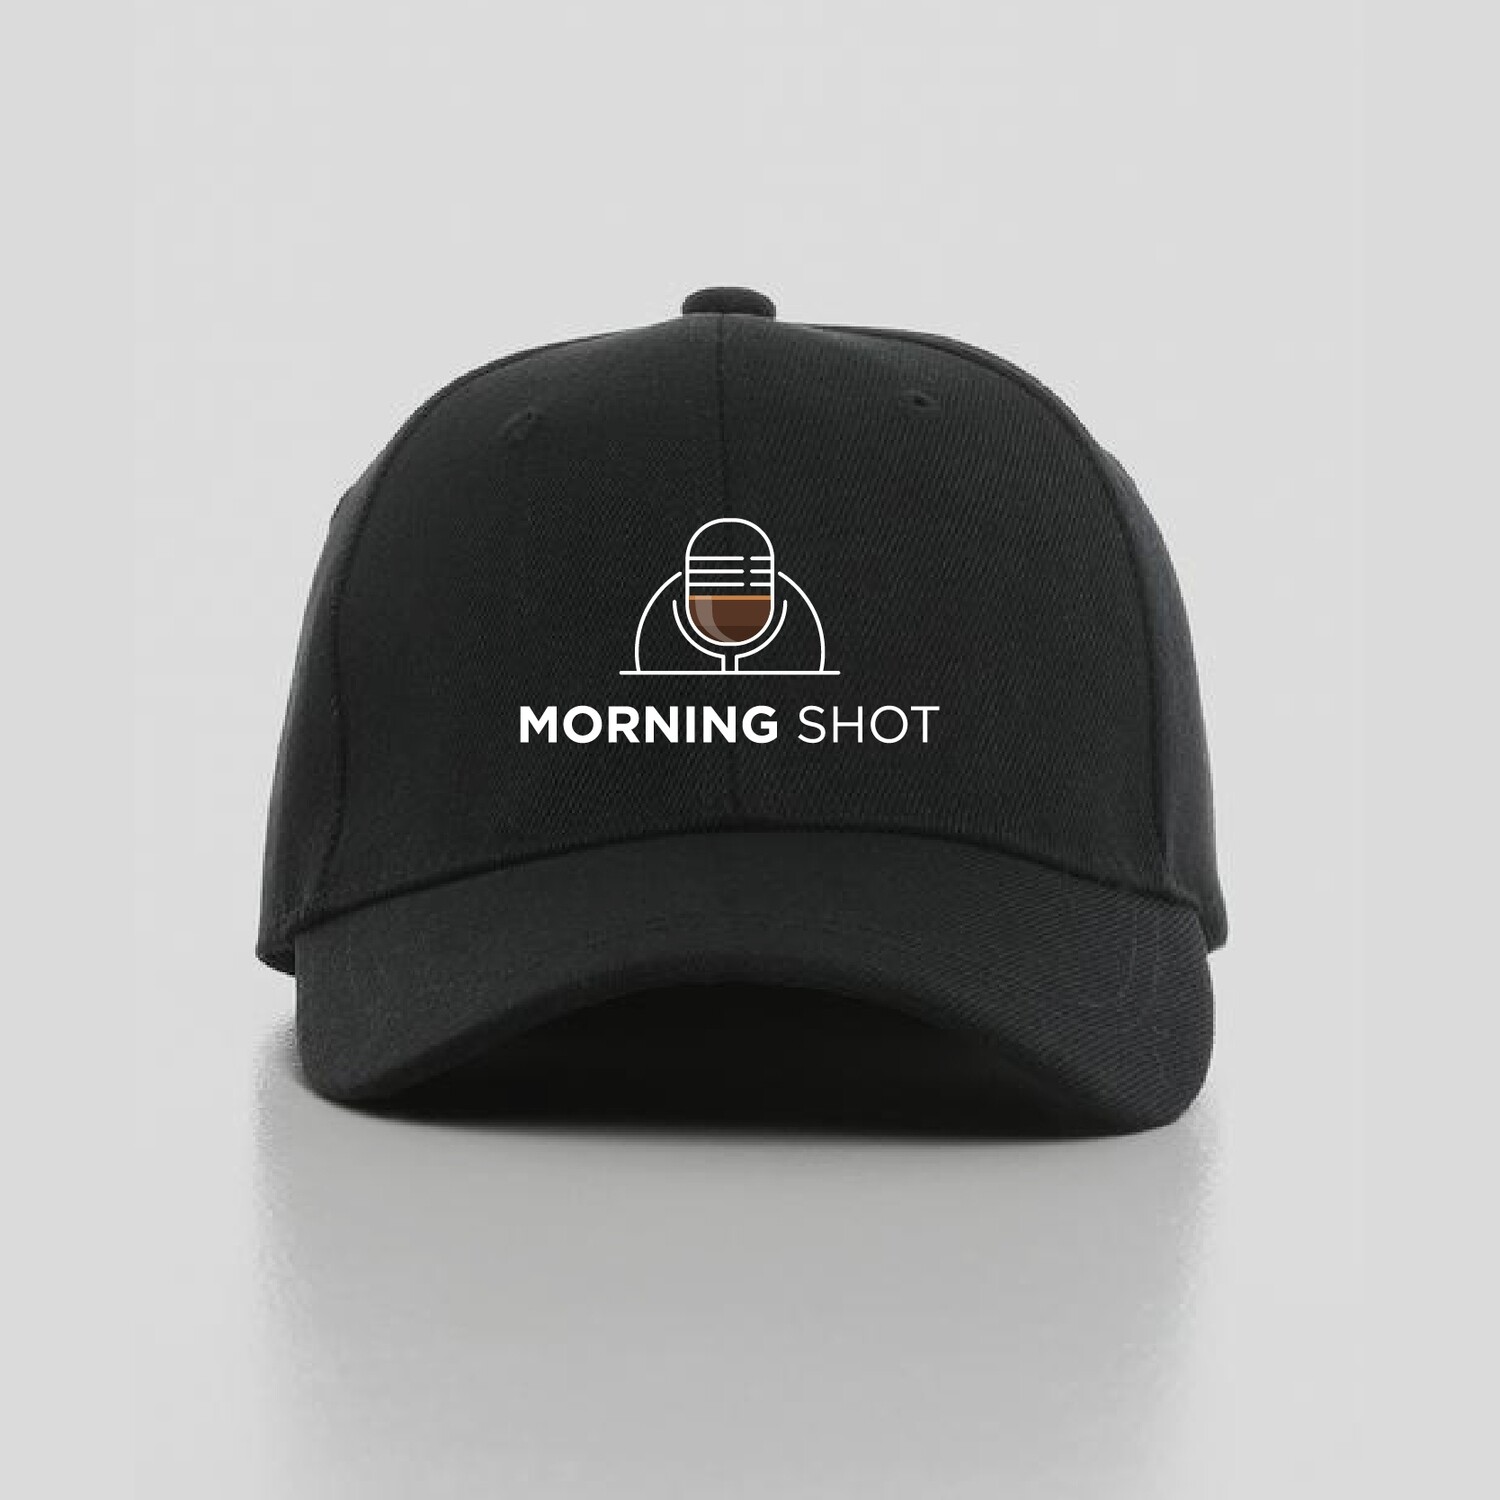 Morning Shot Peak Cap